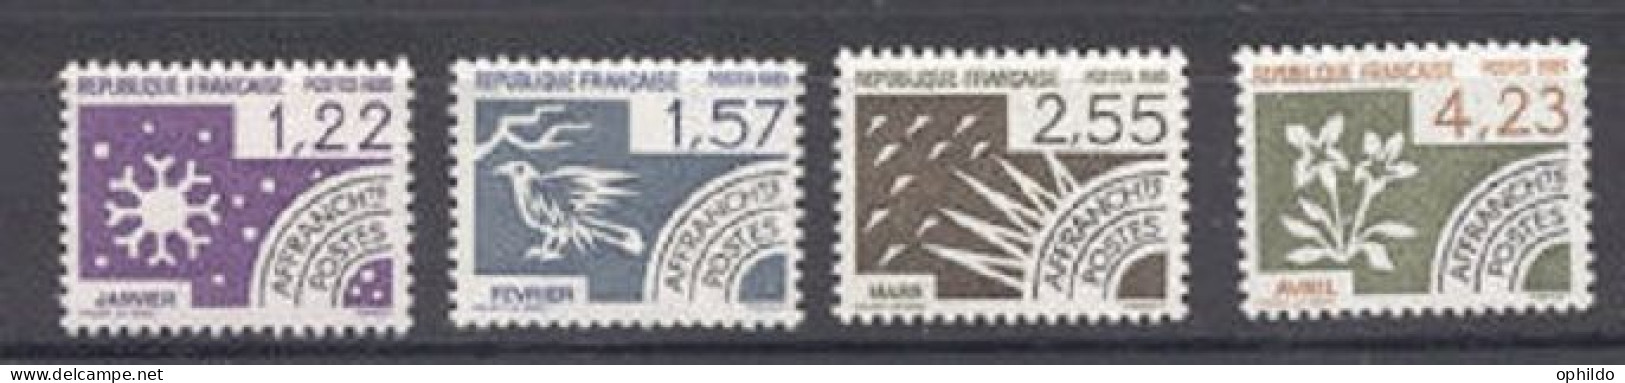 France  Preo   186/189  * *  TB  - 1964-1988